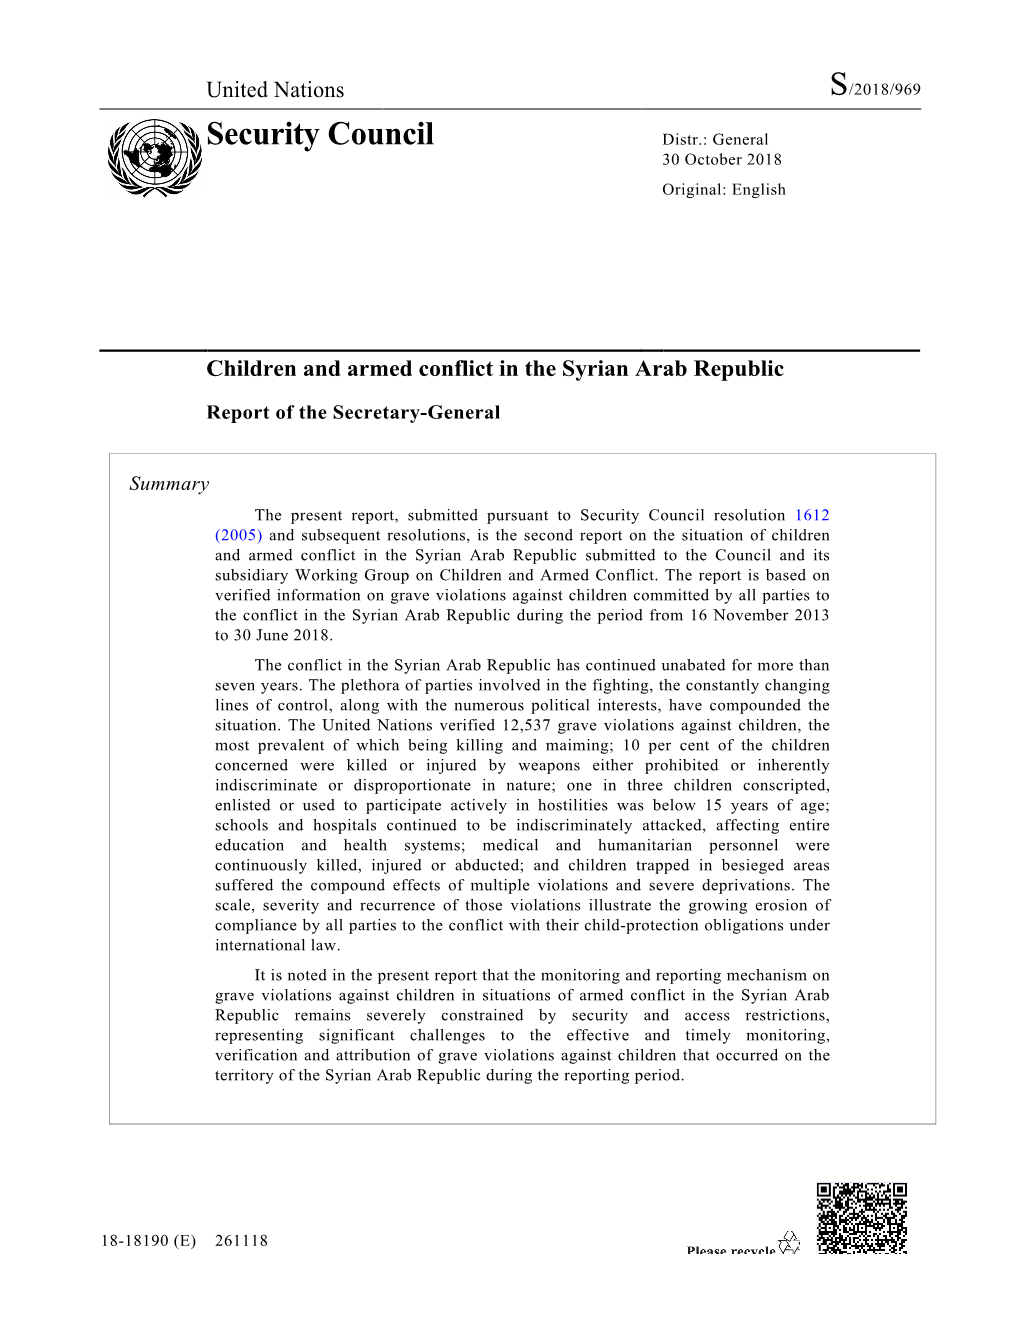 U N Secretary-General's Report on Children and Armed